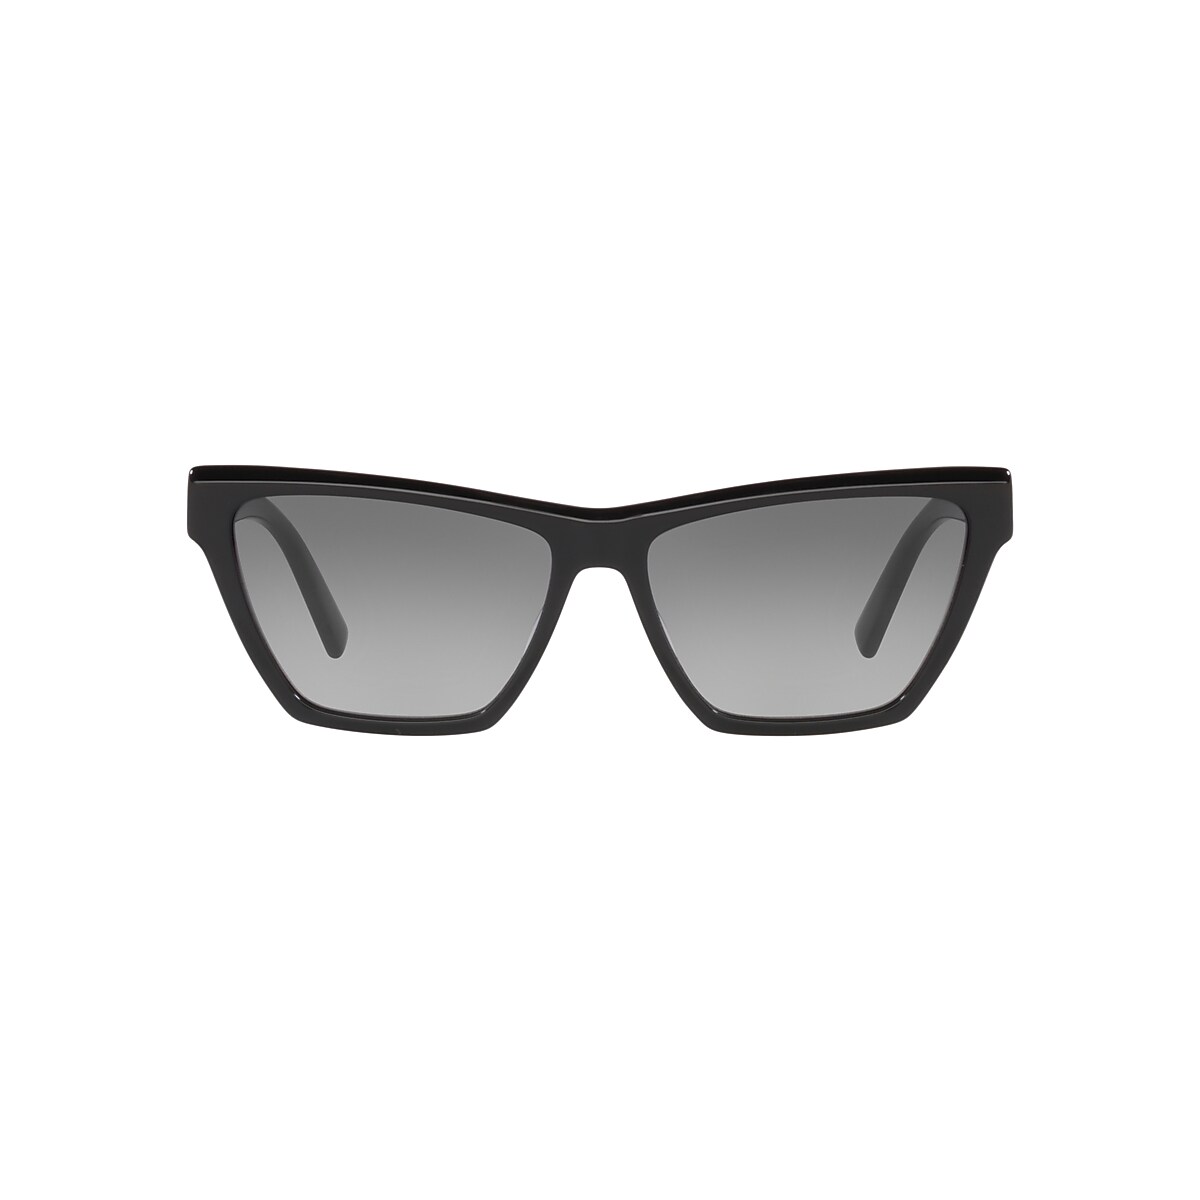 Saint Laurent Mica Cat Eye Acetate Sunglasses in White